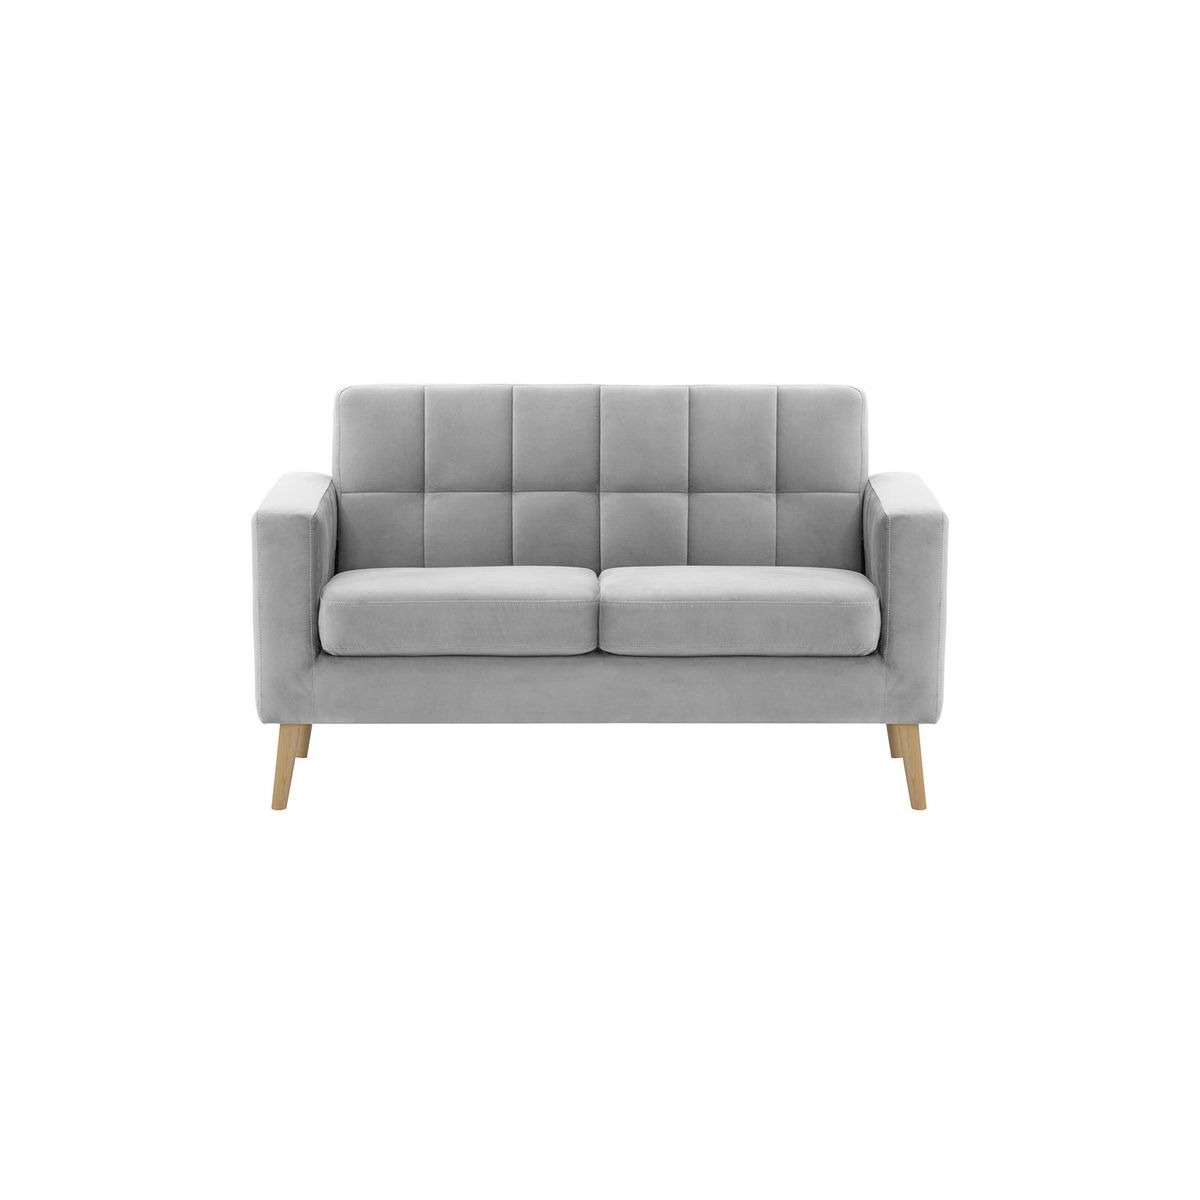 Neat 2 Seater Sofa in a Box, light grey, Leg colour: black - image 1